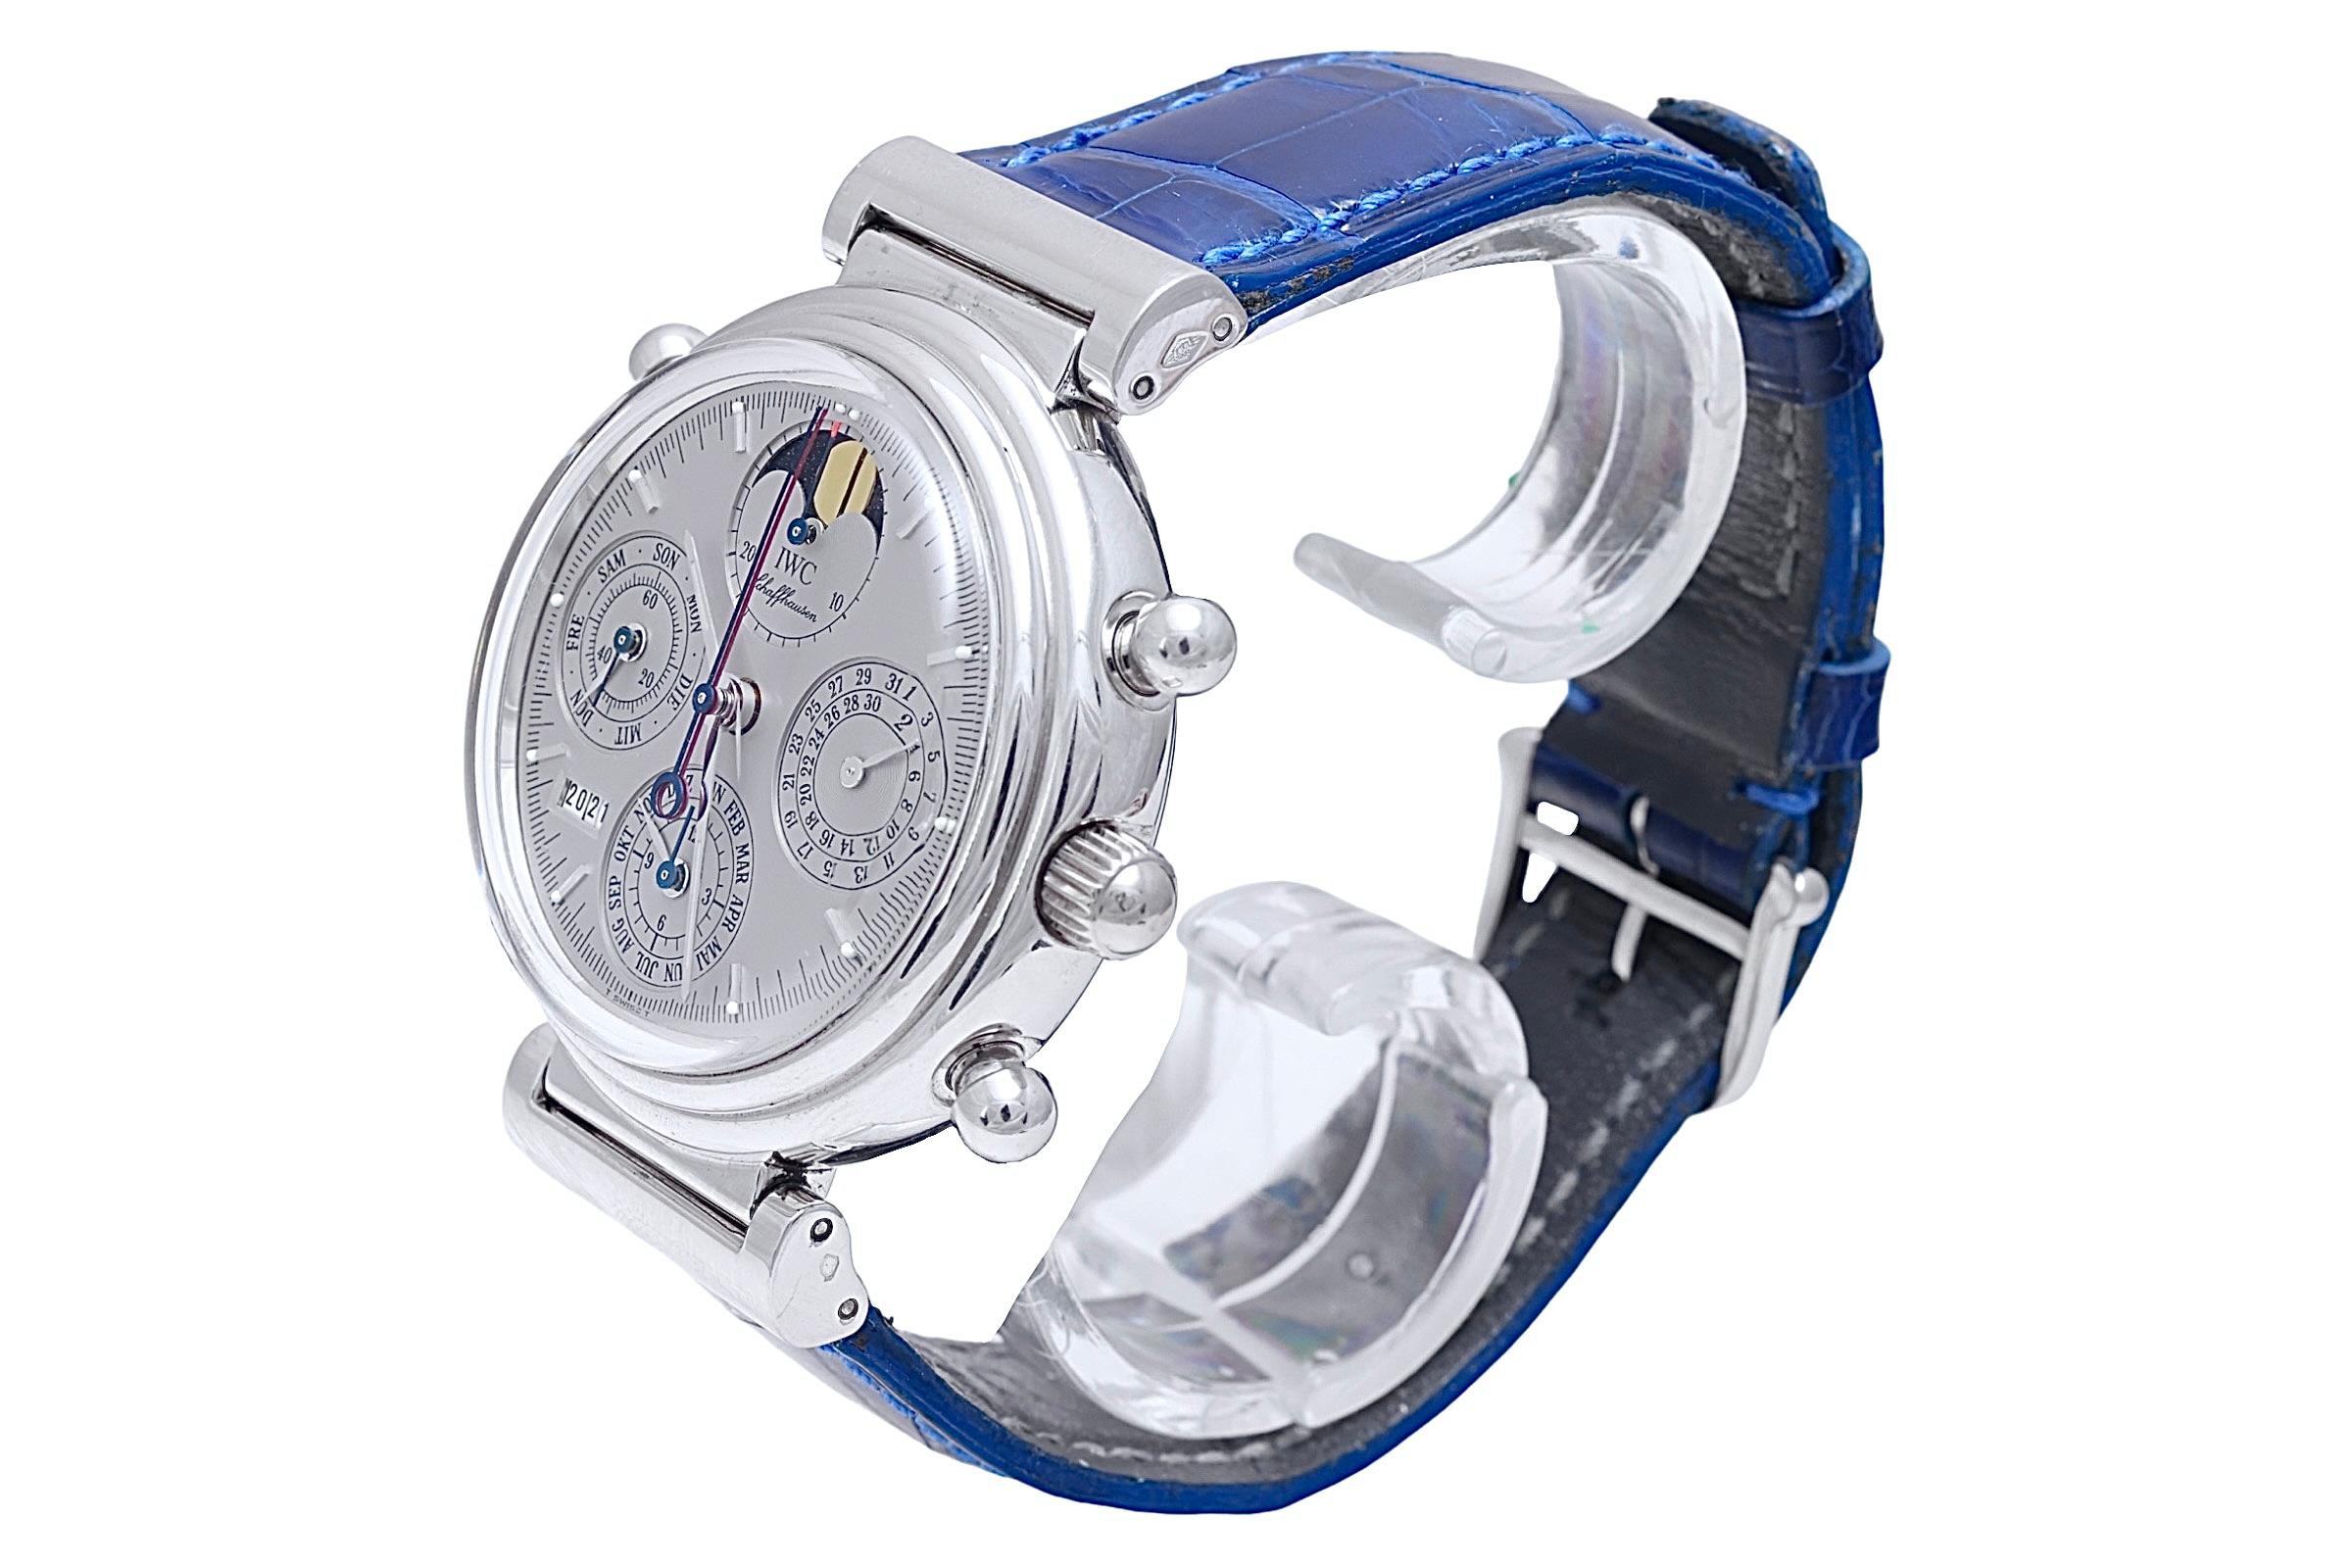 Platinum IWC Perpetual Calendar Split Second Chronograph Limited Wrist Watch3751 For Sale 1